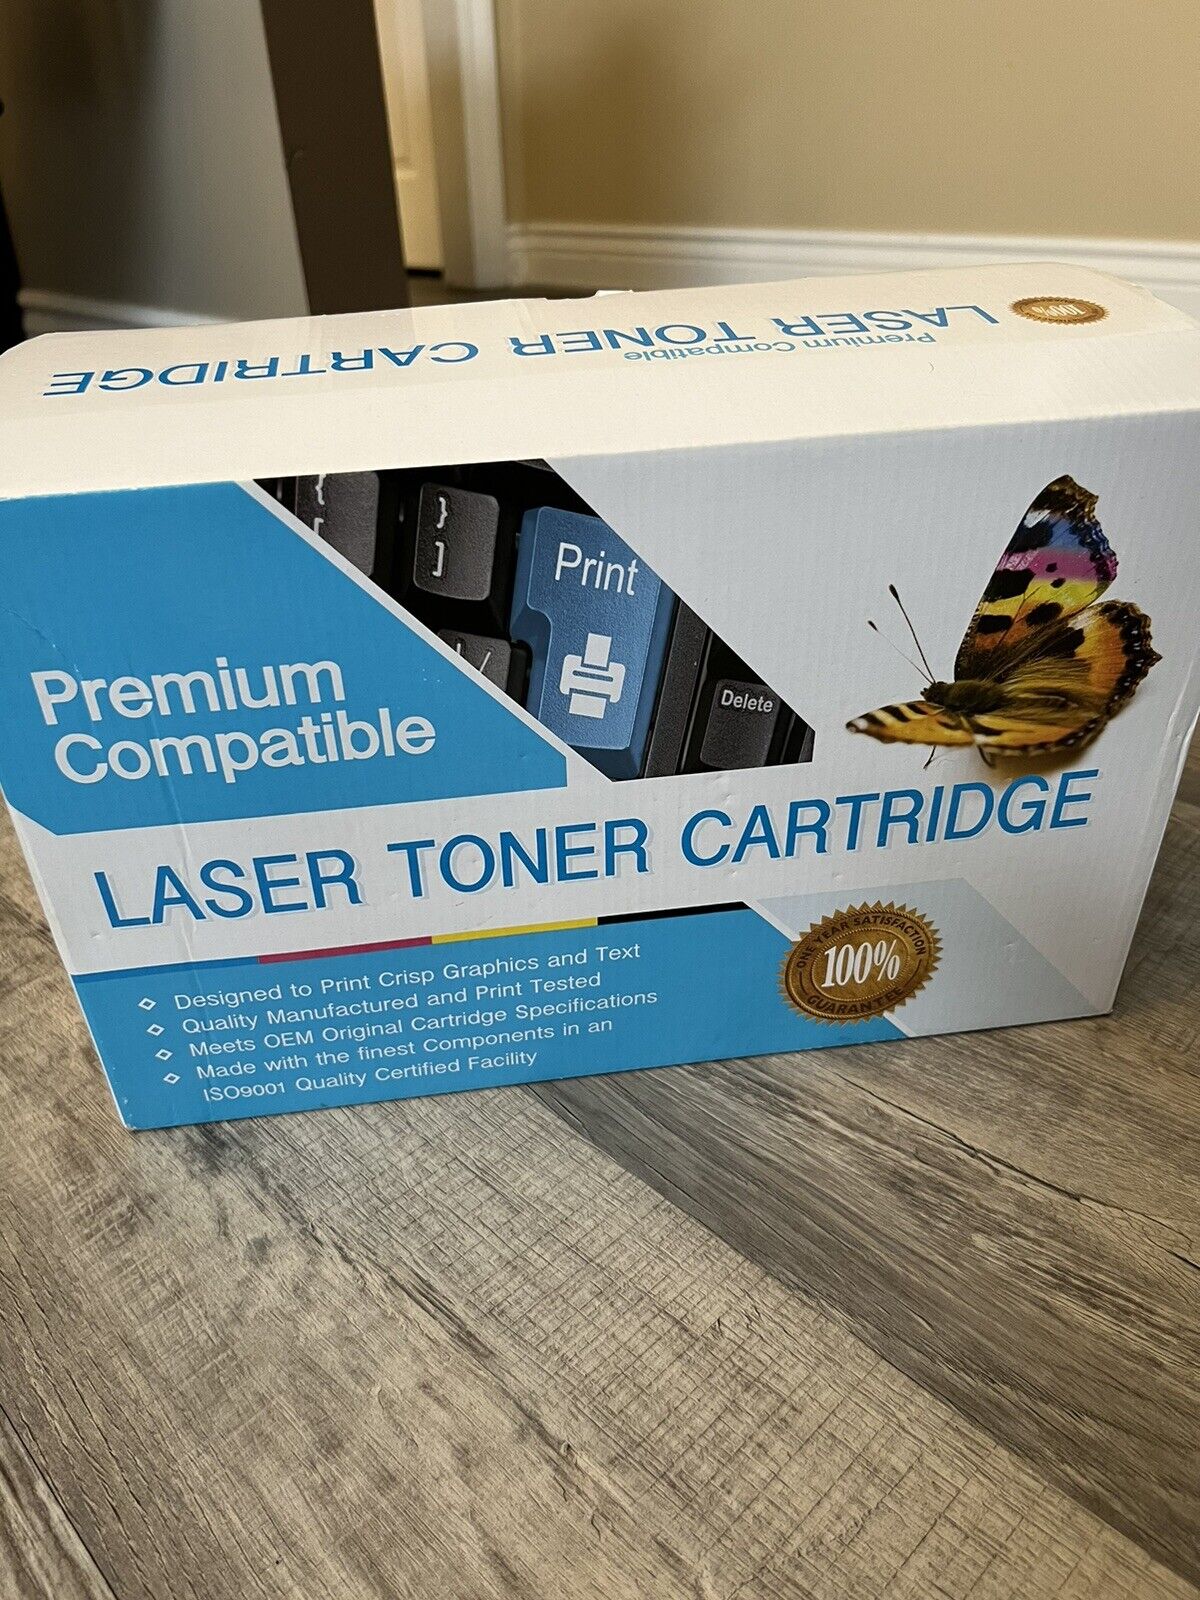 Premium Compatible Laser Toner Cartridge K CD2335 for Dell 2335 Printers